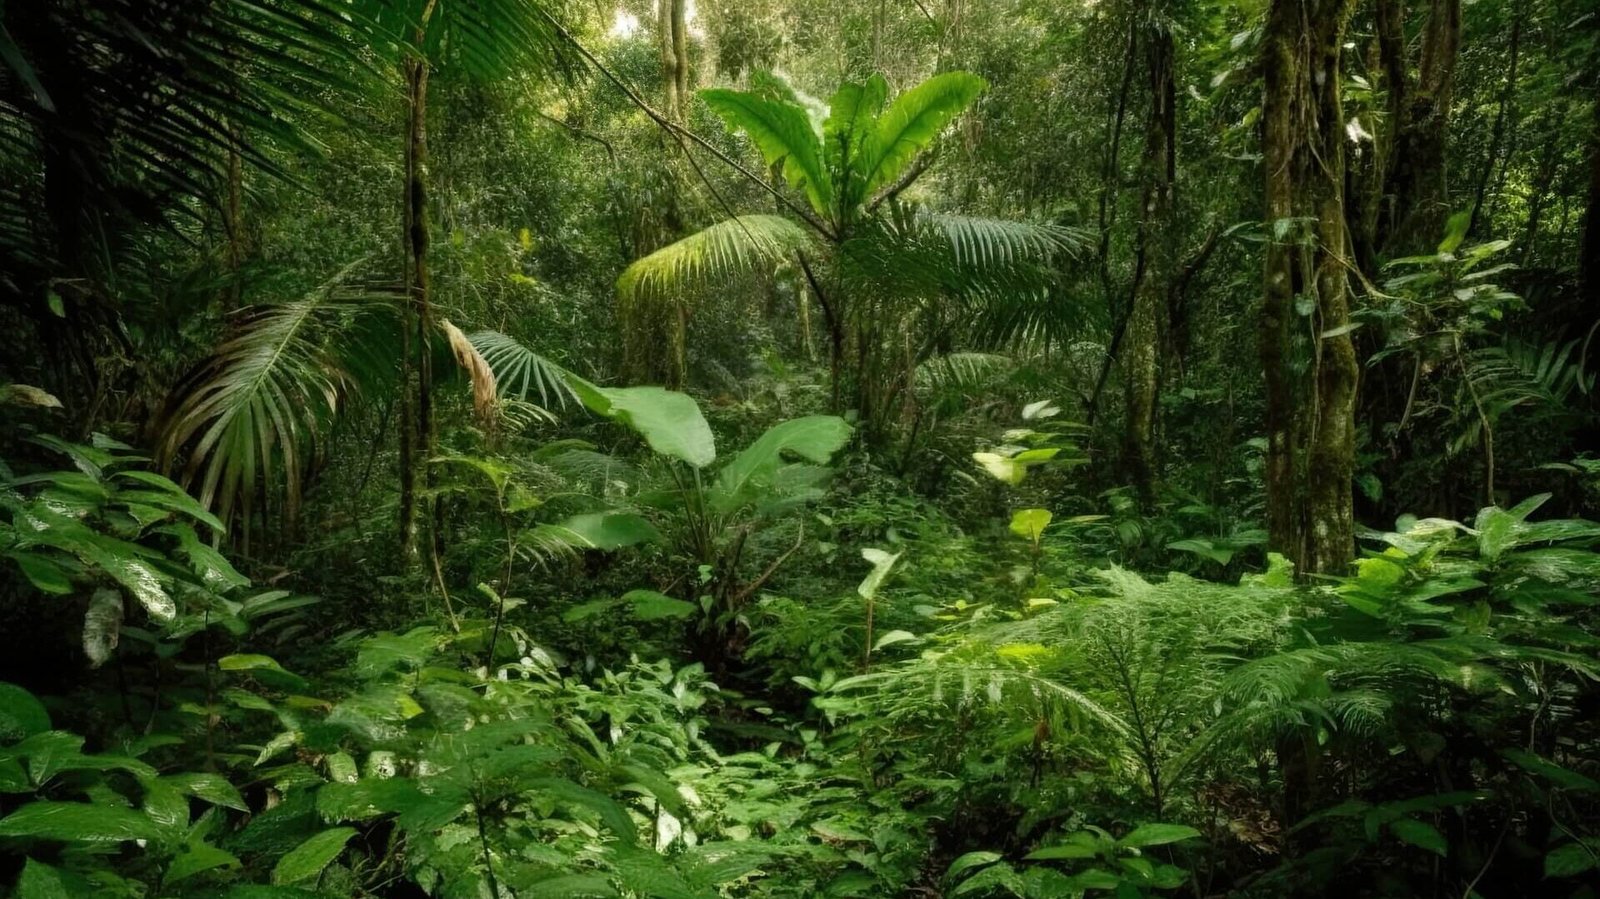 An image of a lush tropical rainforest.